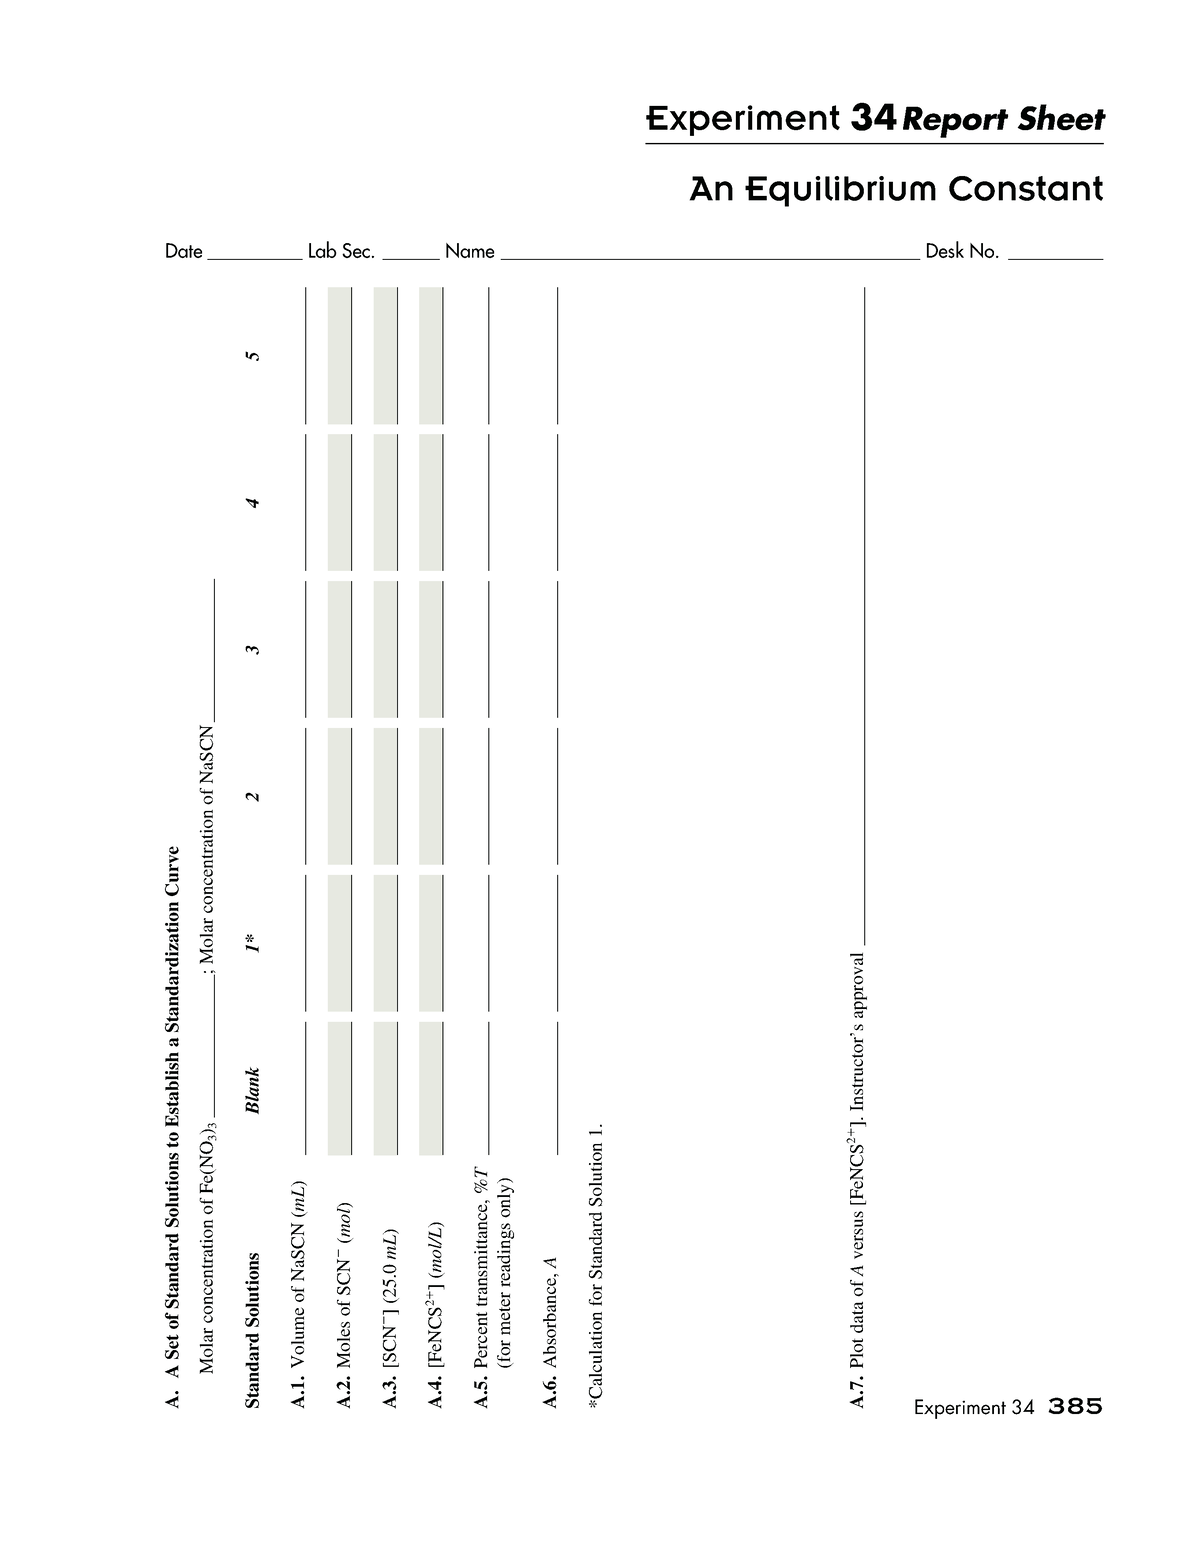 ex-34-report-sheet-from-manual-experiment-34-report-sheet-an